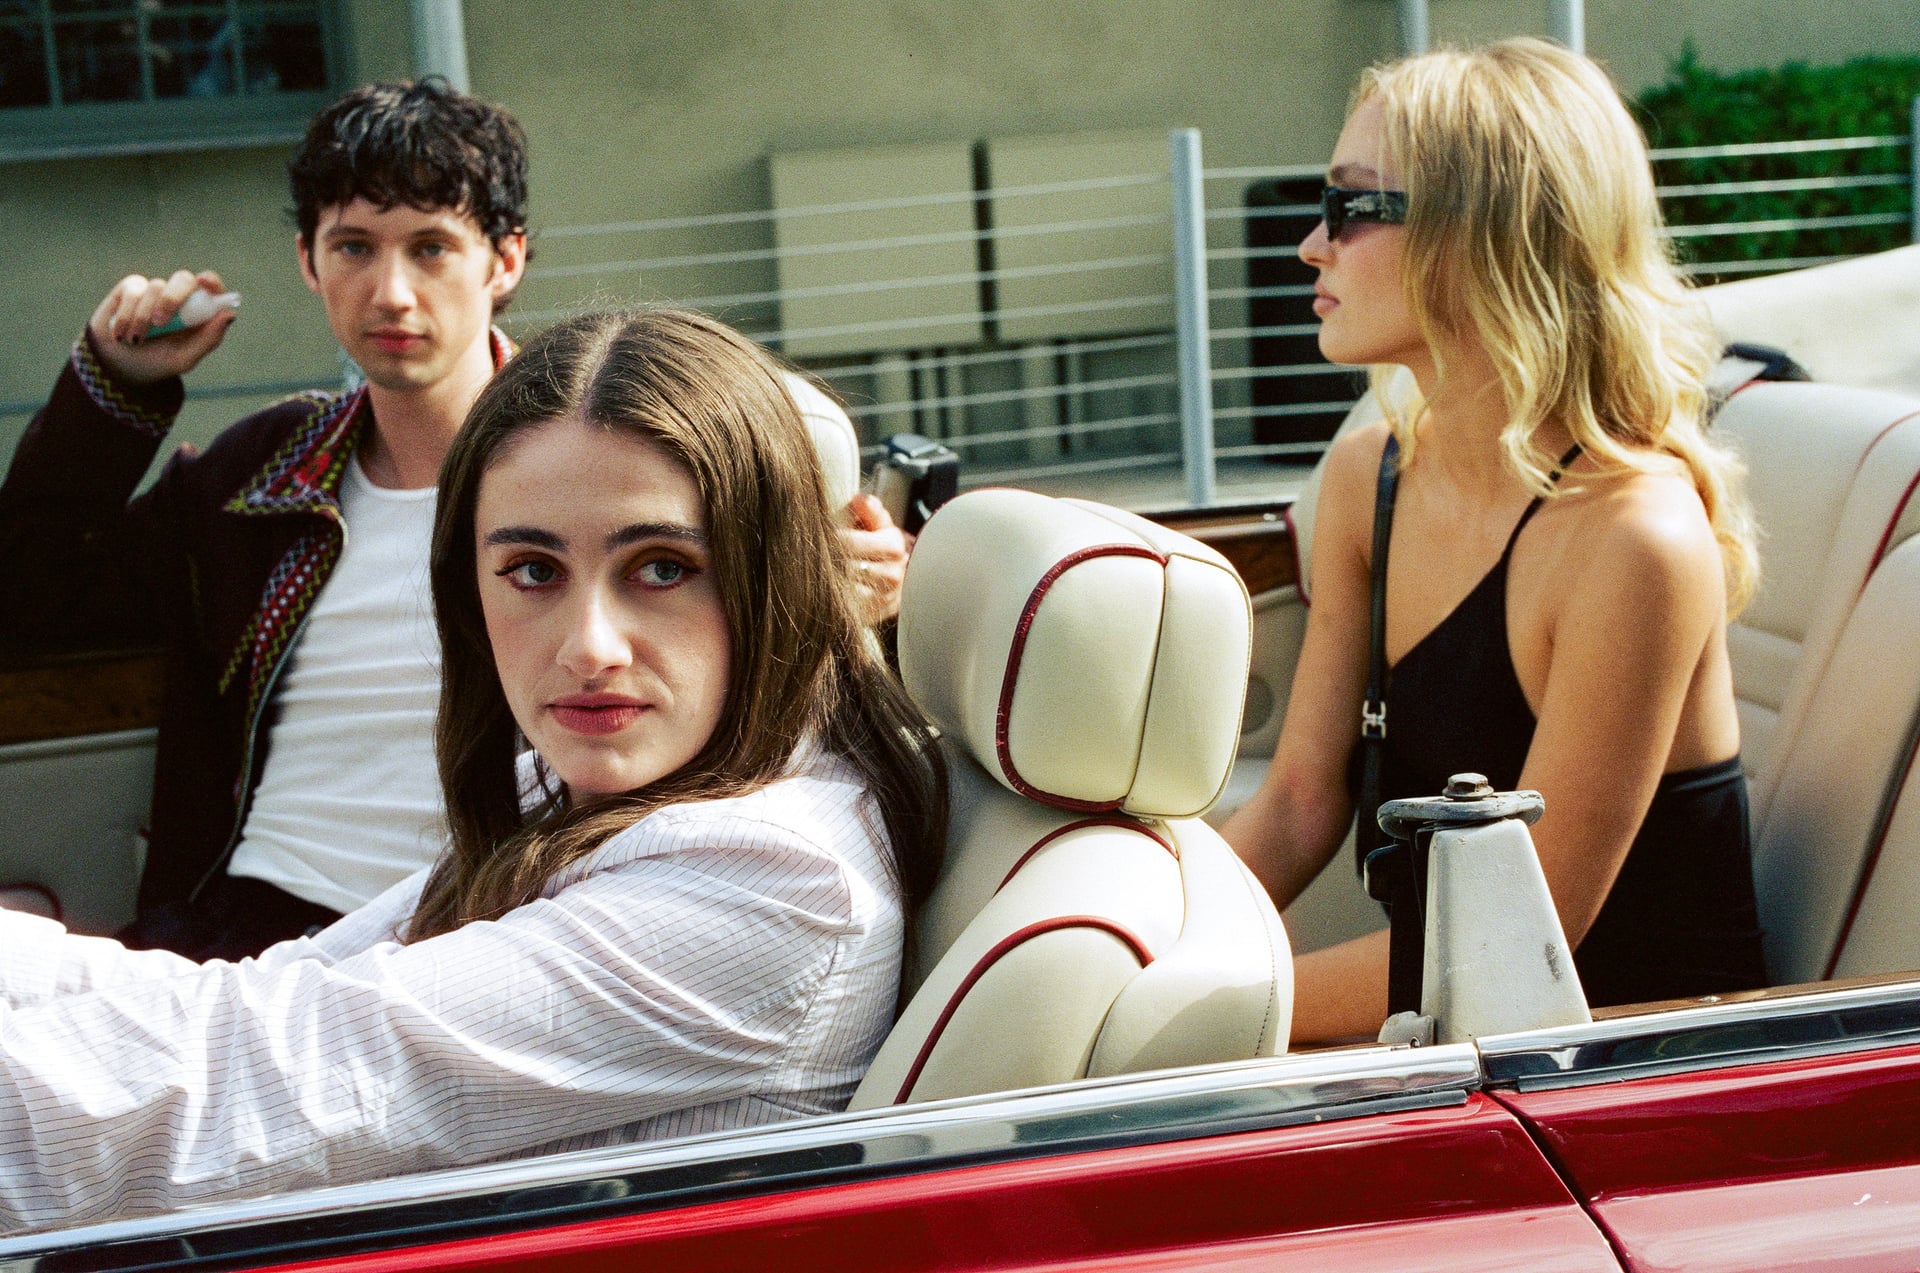 Troye Sivan, Rachel Sennott, and Lily-Rose Depp's makeup in HBO's The Idol